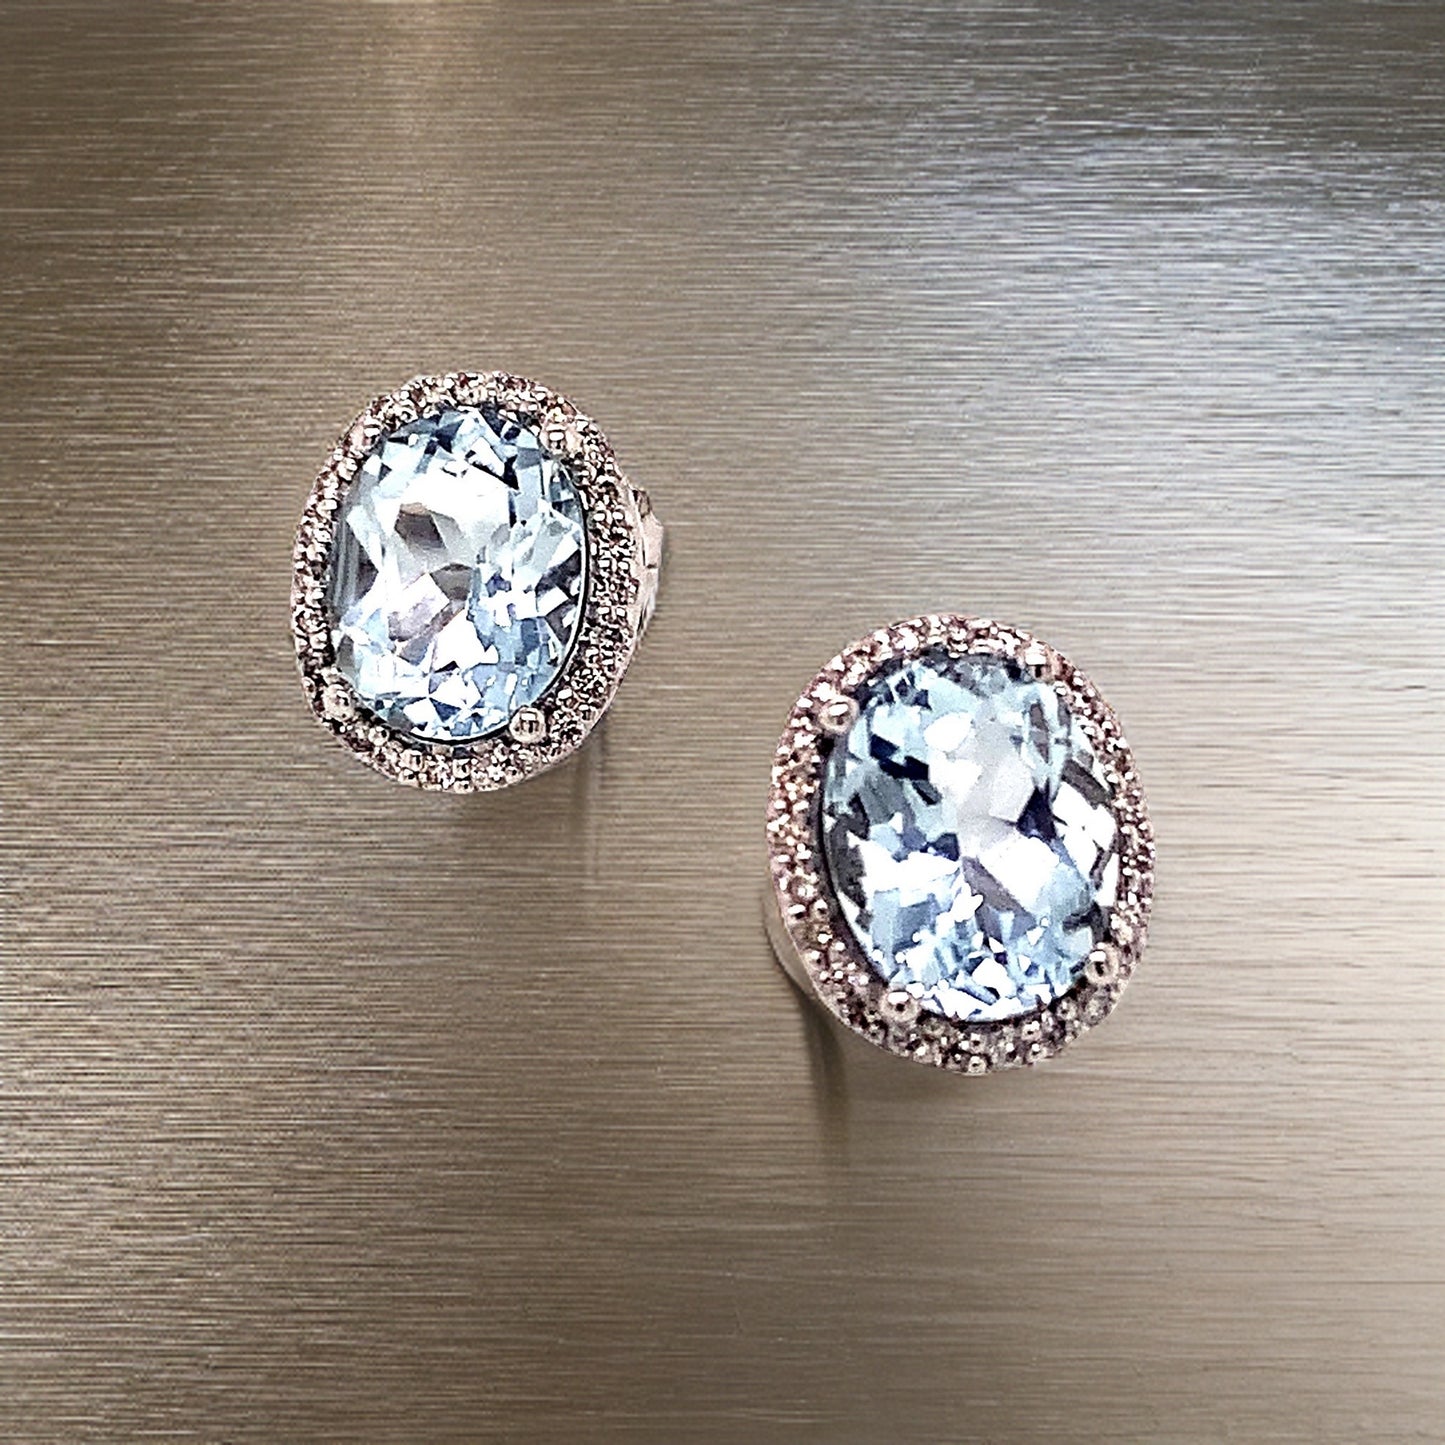 Natural Aquamarine Diamond Stud Earrings 14k WG 5.46 TCW Certified $5,950 121115 - Certified Fine Jewelry